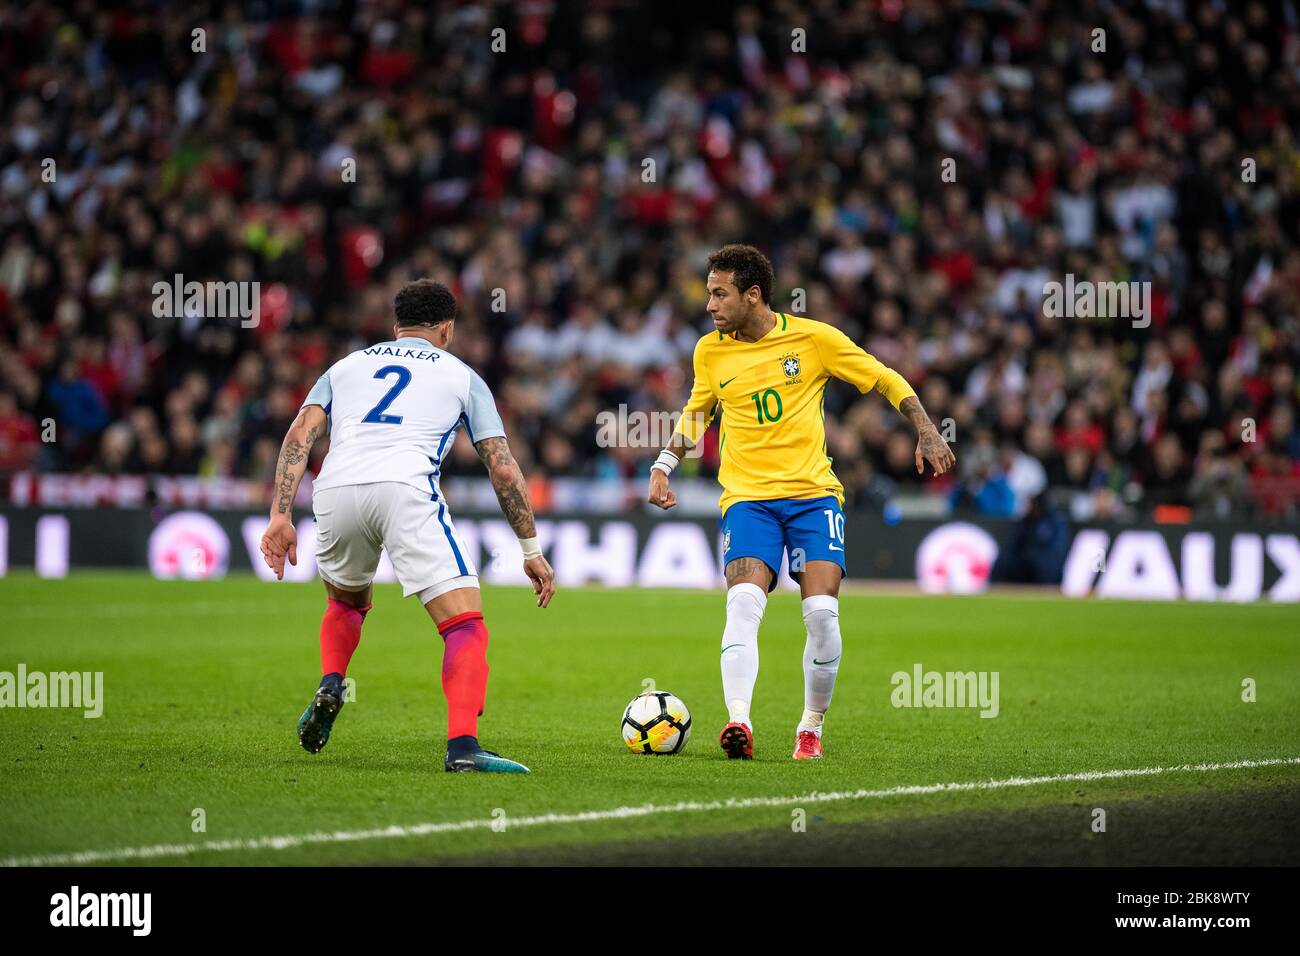 Nazionale del Brasile a Wembley in partita contro l'Inghilterra Foto Stock